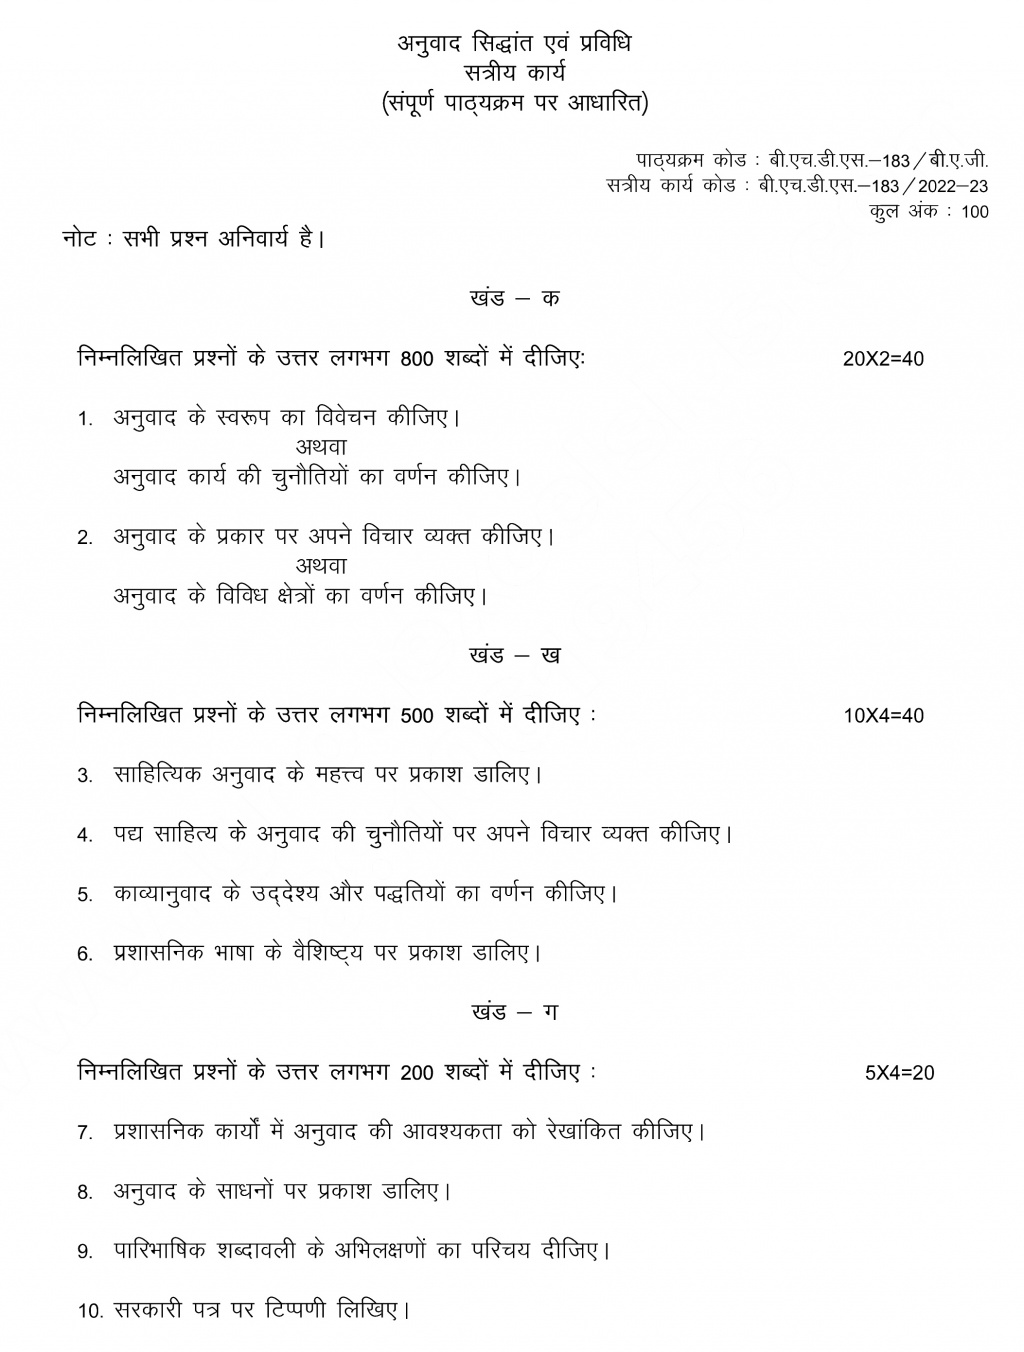 IGNOU BHDS-183 - Anuvad: Siddhan aur Pravidhi Latest Solved Assignment-July 2022 – January 2023